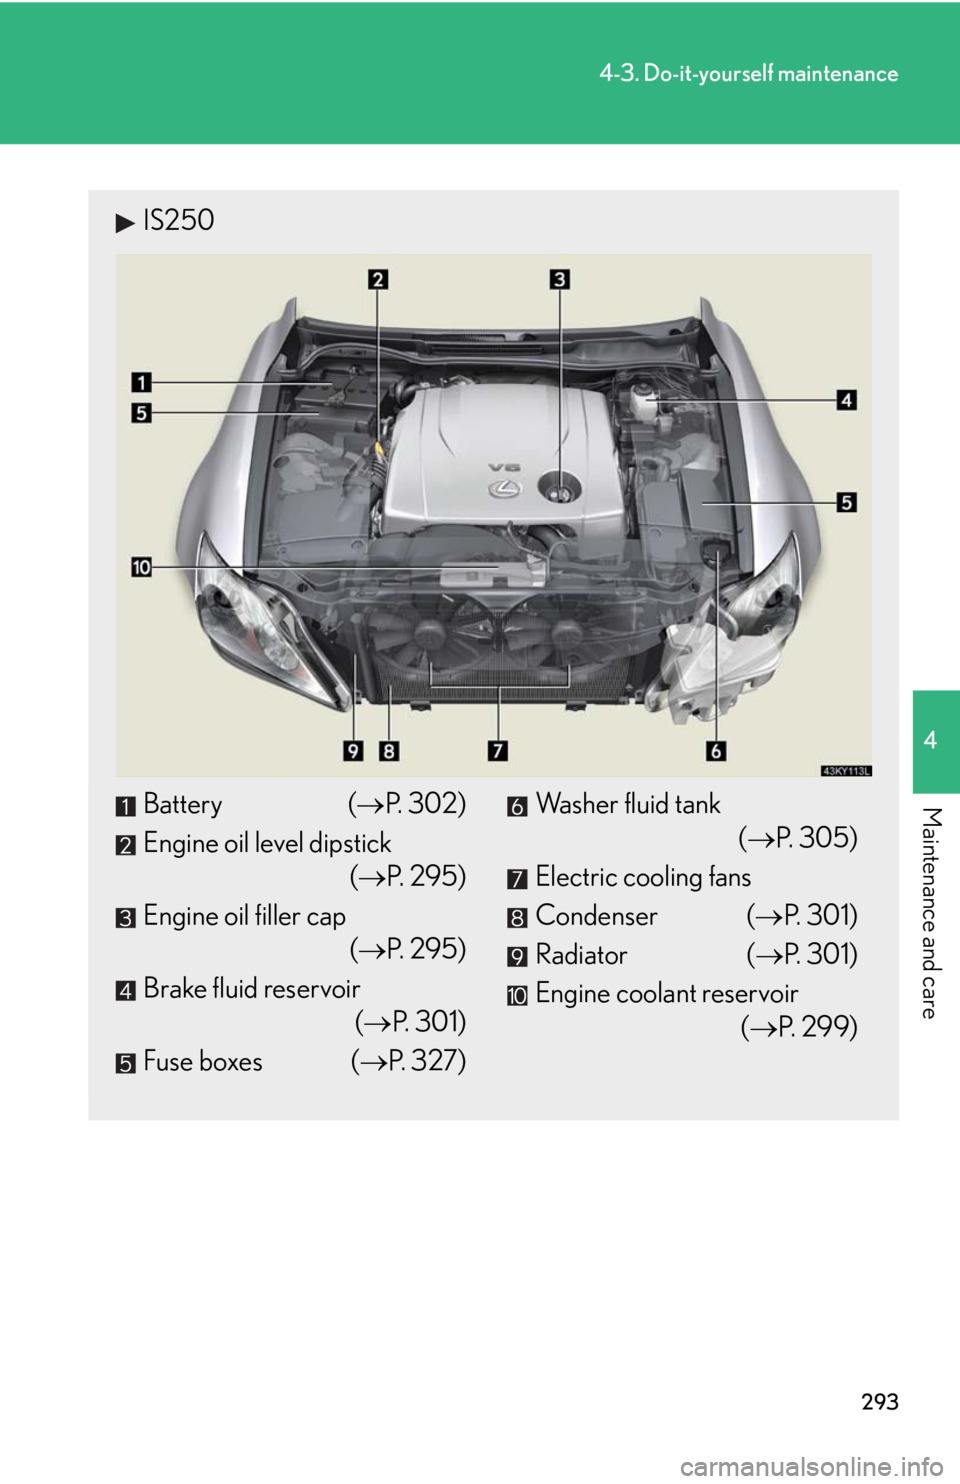 Lexus IS250 2008  Audio/video System / LEXUS 2008 IS250 OWNERS MANUAL (OM53699U) 293
4-3. Do-it-yourself maintenance
4
Maintenance and care
IS250
Battery (P. 302)
Engine oil level dipstick (P. 295)
Engine oil filler cap (P. 295)
Brake fluid reservoir (P. 301)
Fuse boxe